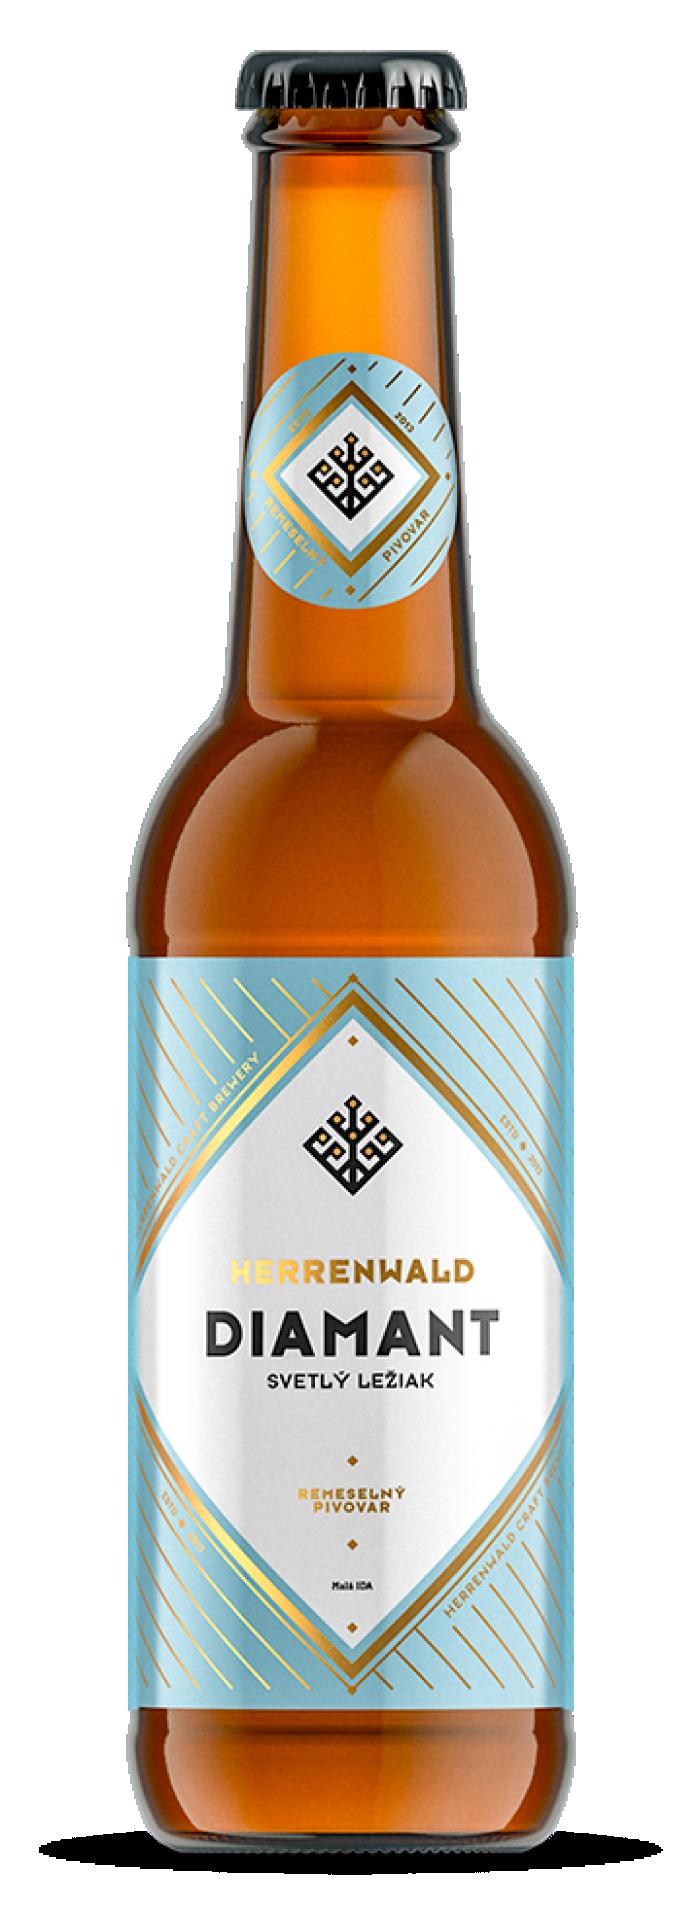 Remeselný pivovar Herrenwald - Remeselný pivovar Herrenwald